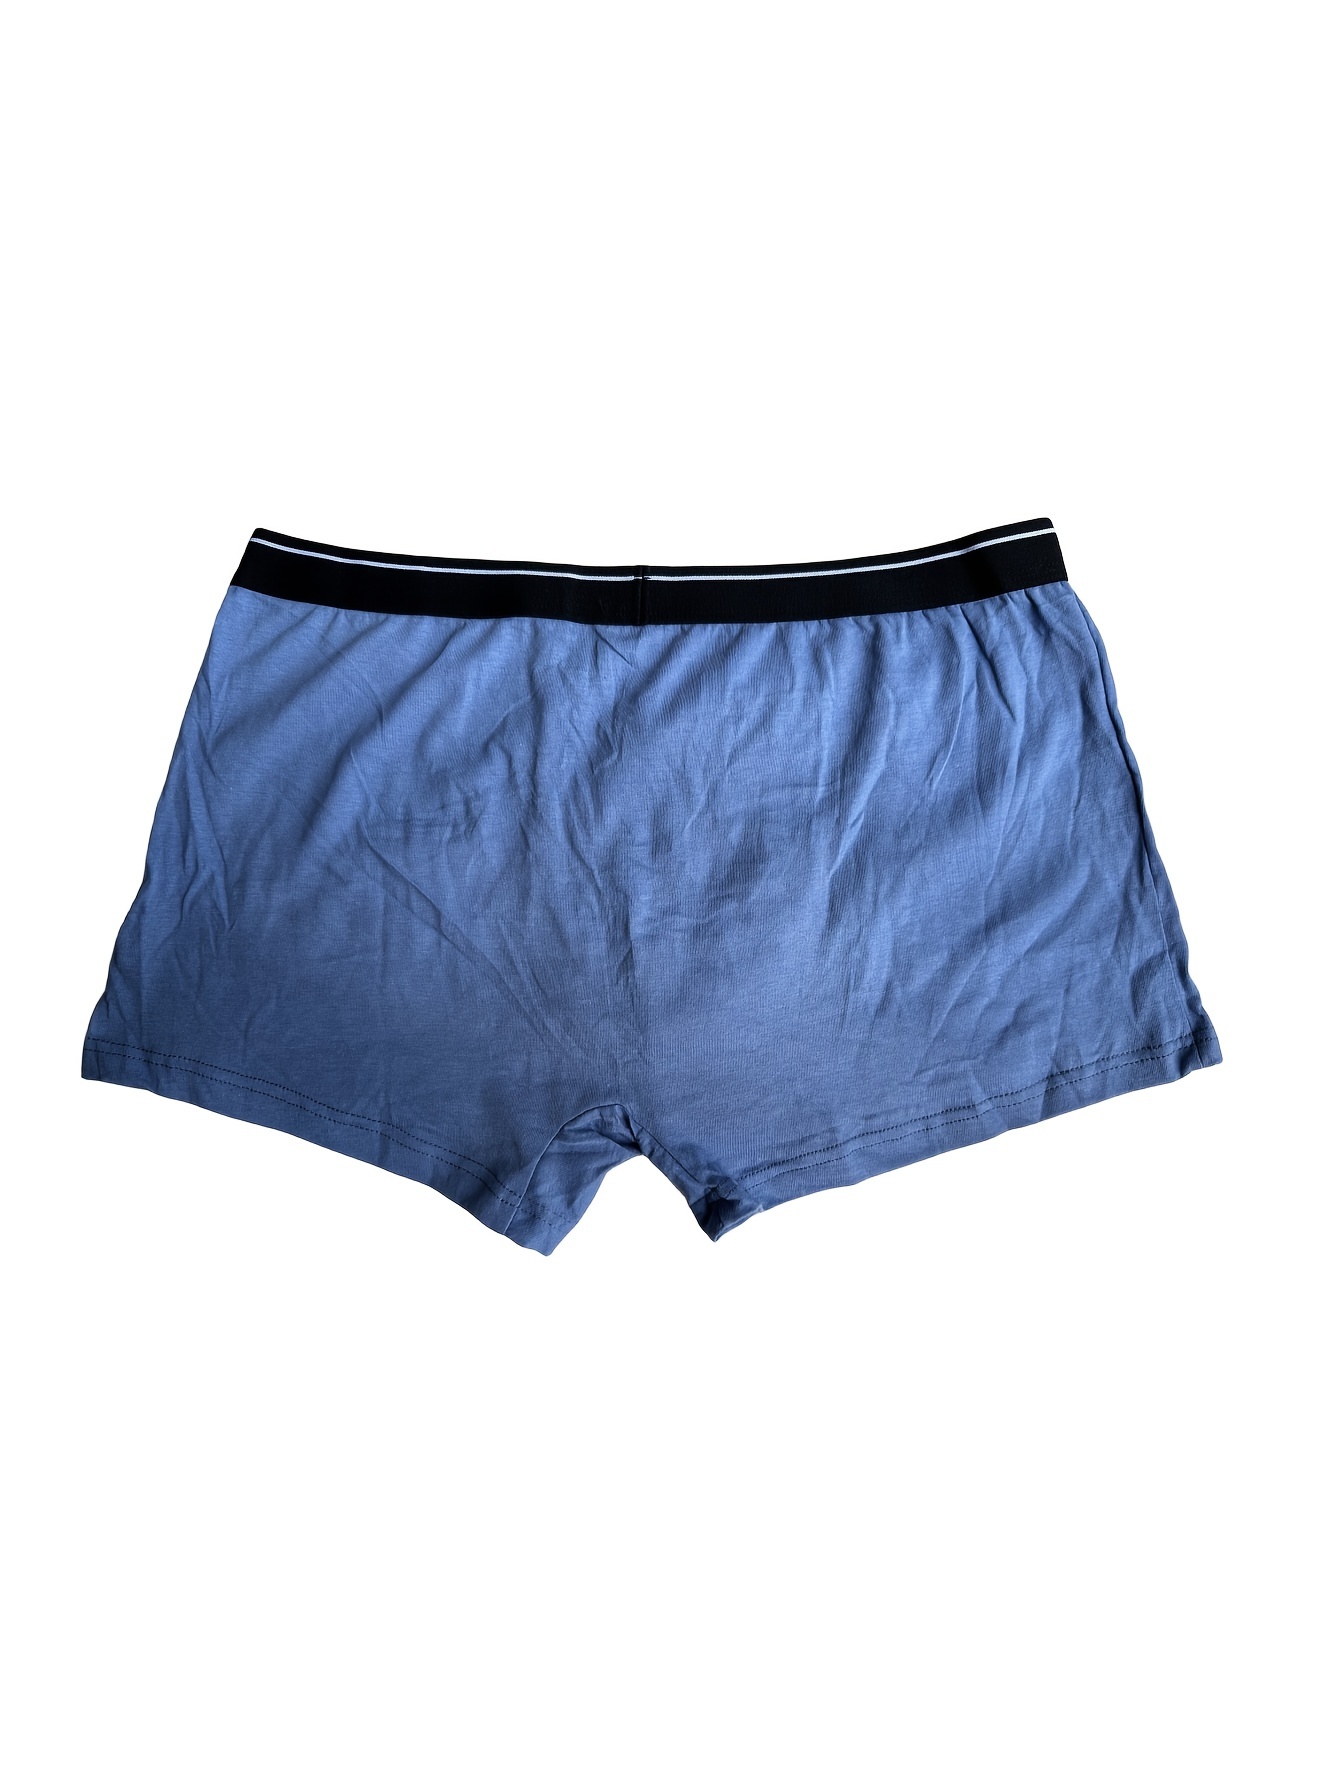 Mens Underwear Breathable Cotton Underpants Boxers Shorts Loose Comfortable  CA